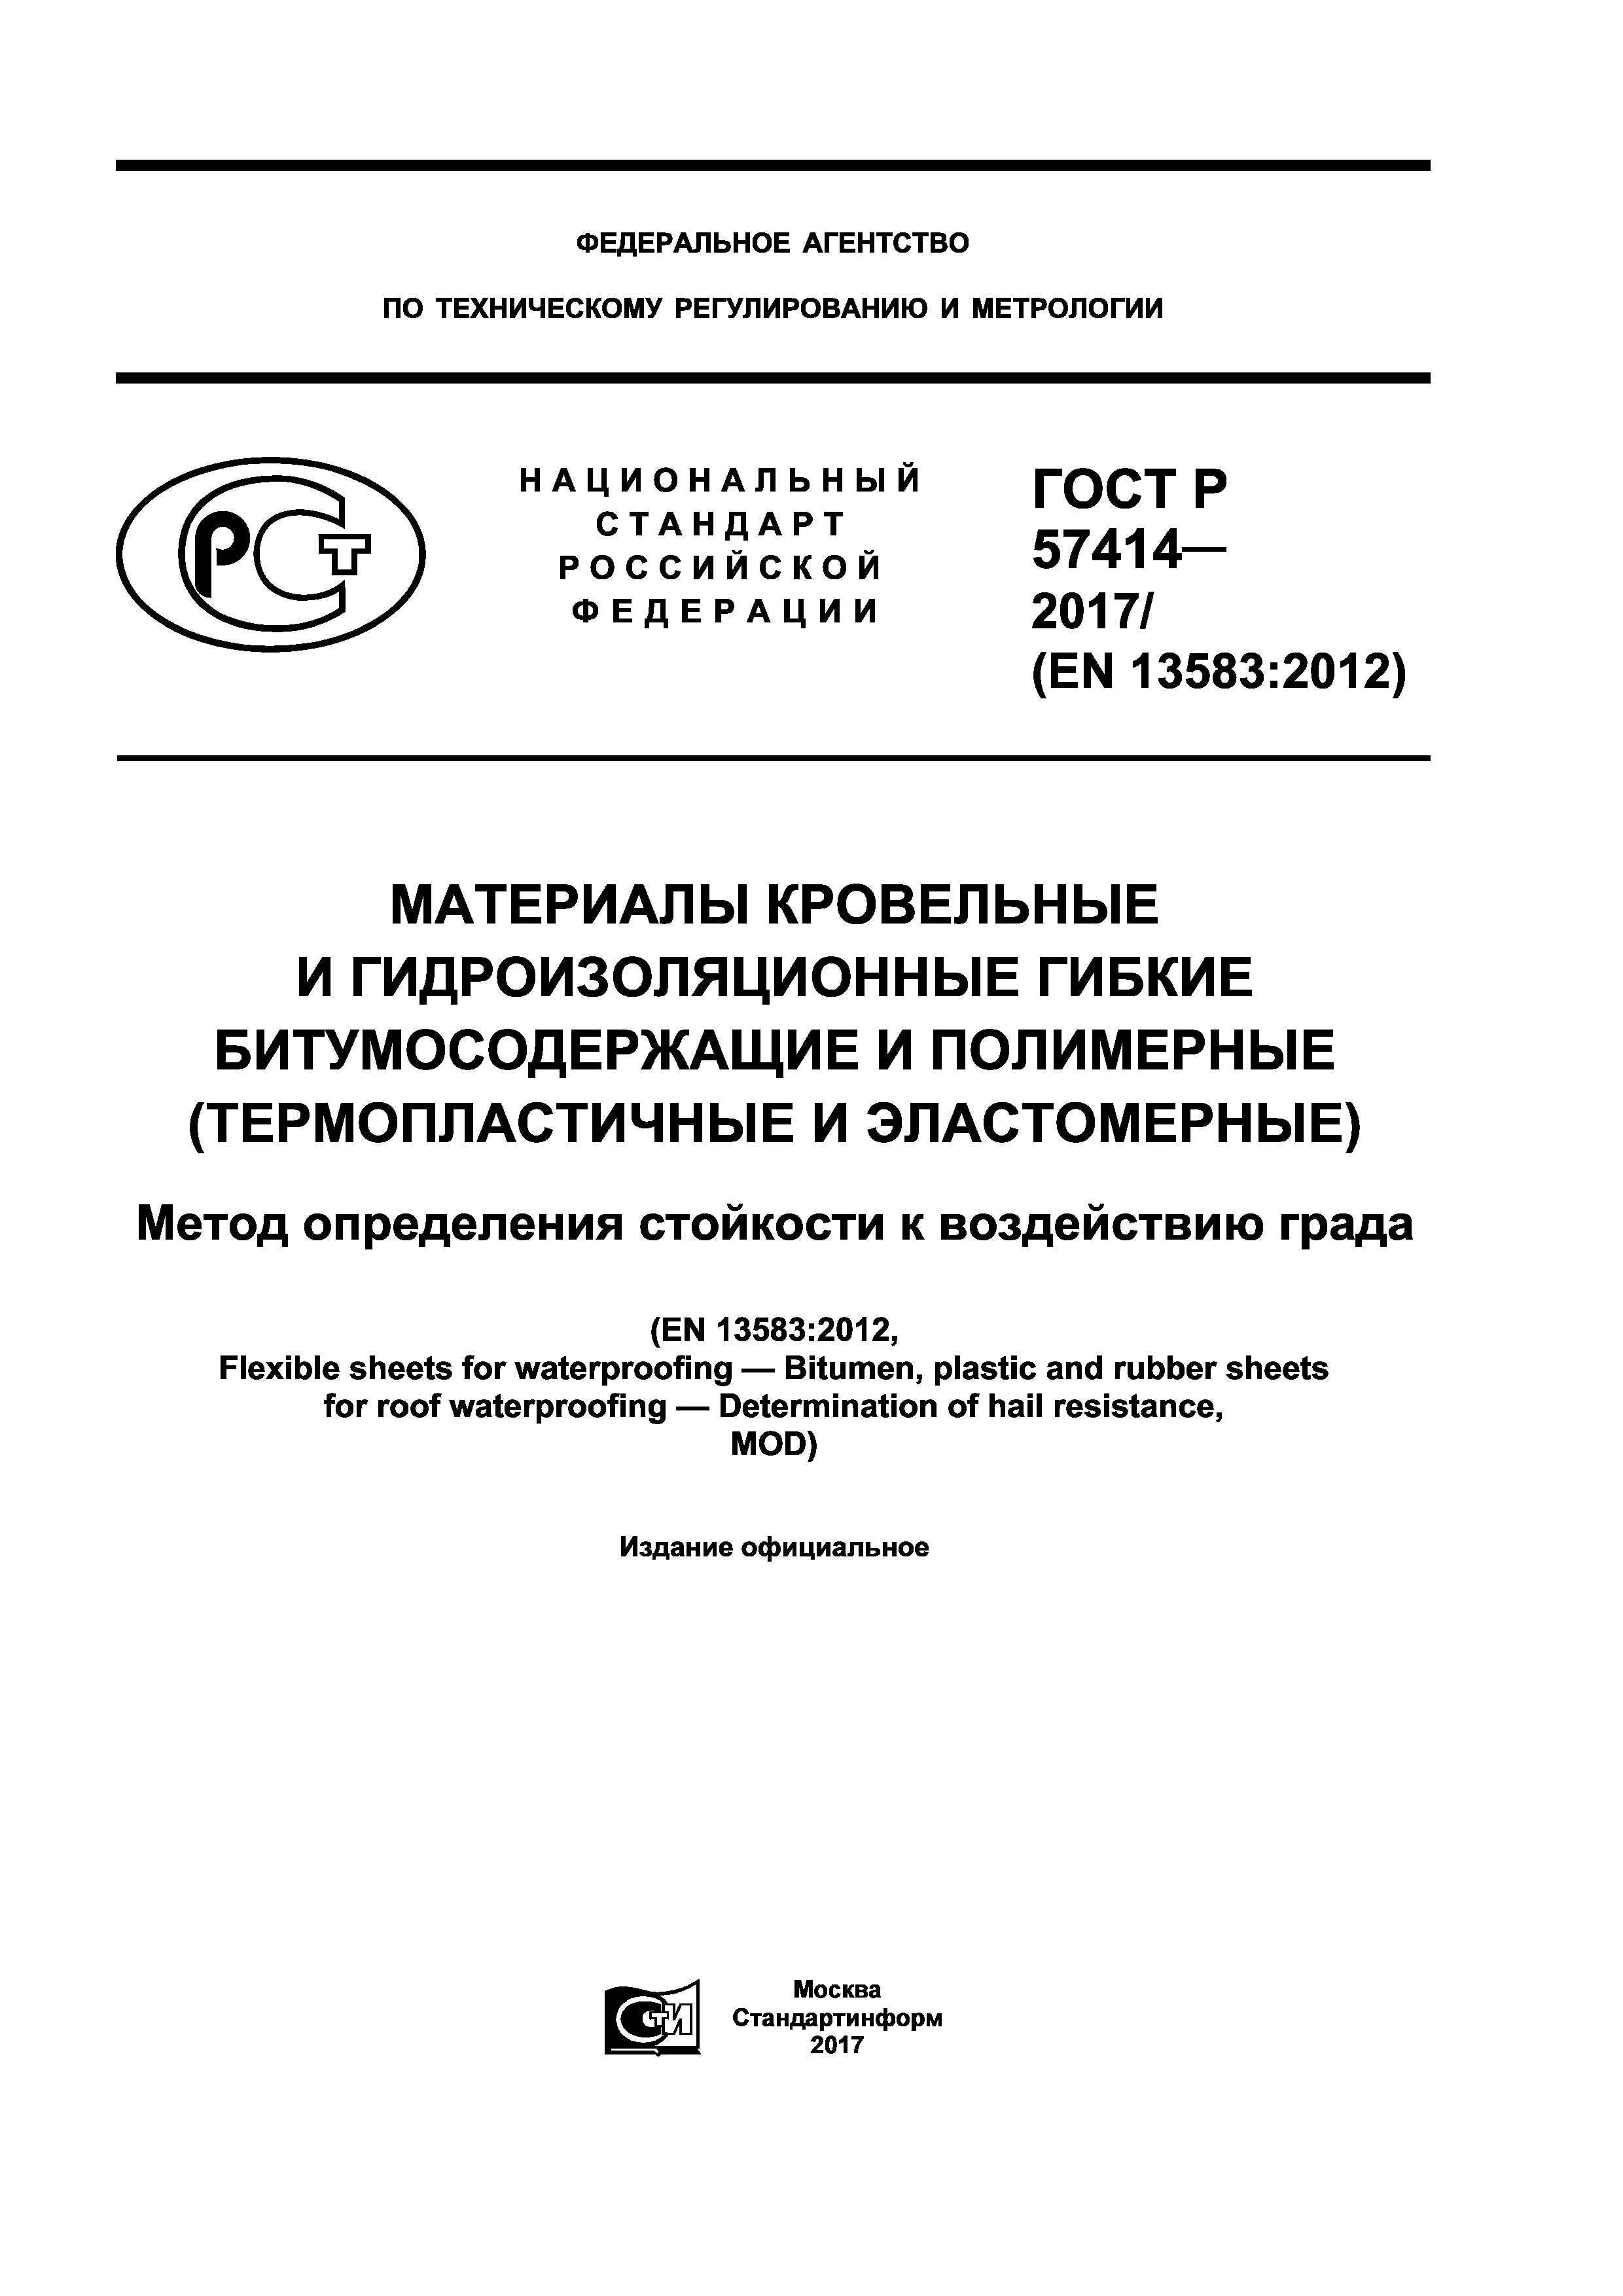 ГОСТ Р 57414-2017